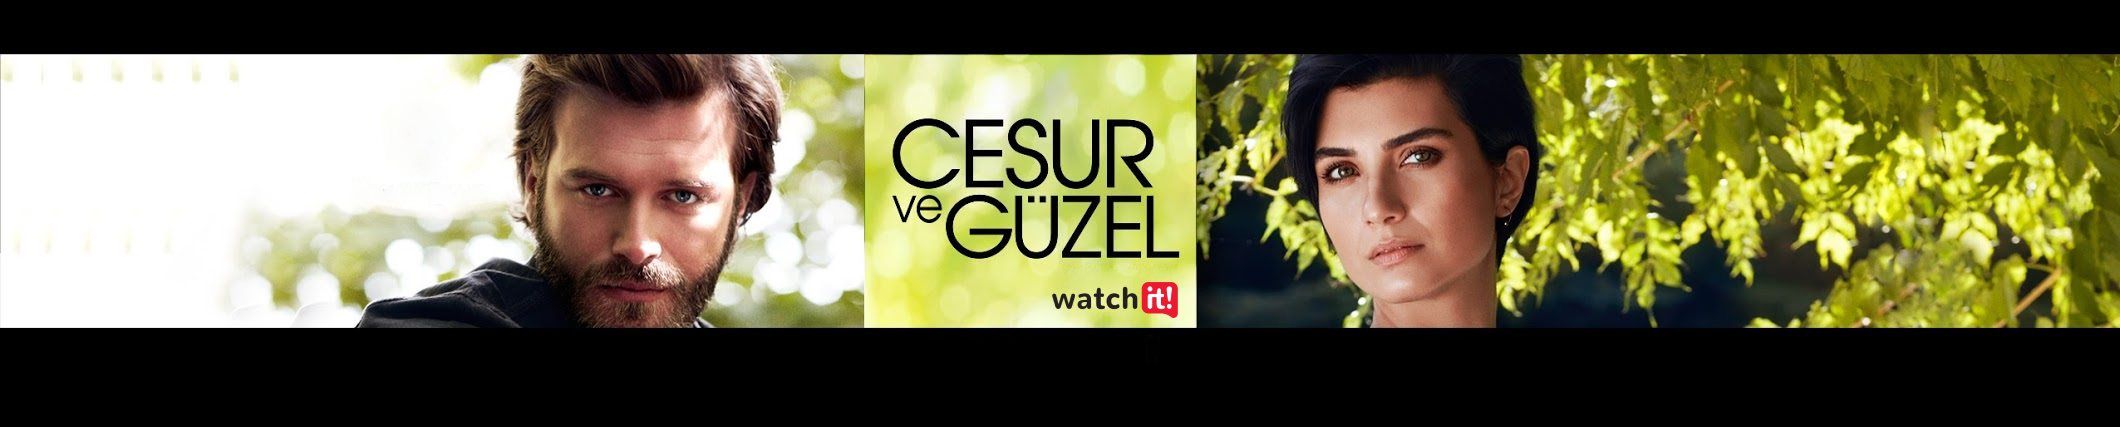 Cesur ve Guzel English subtitles | Brave and Beautiful